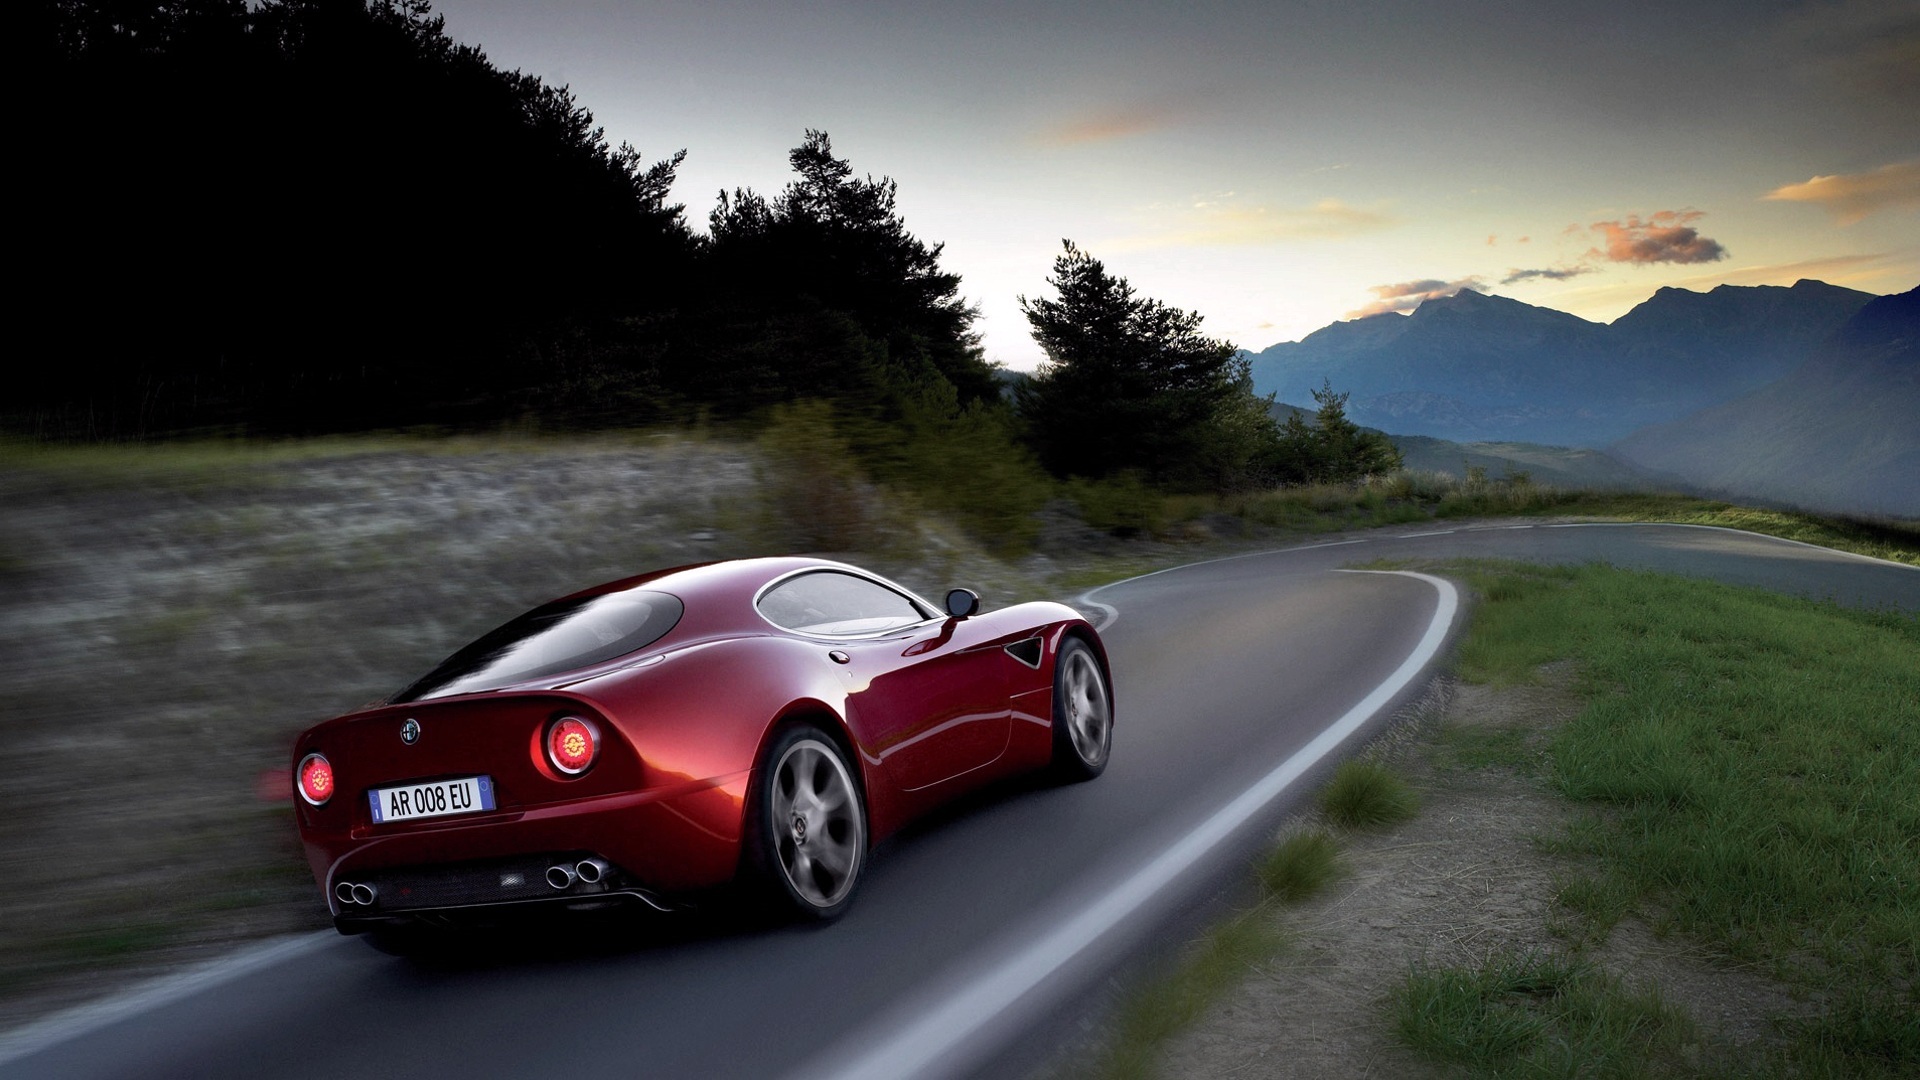 Descarga gratuita de fondo de pantalla para móvil de Transporte, Automóvil, Carreteras, Alfa Romeo.